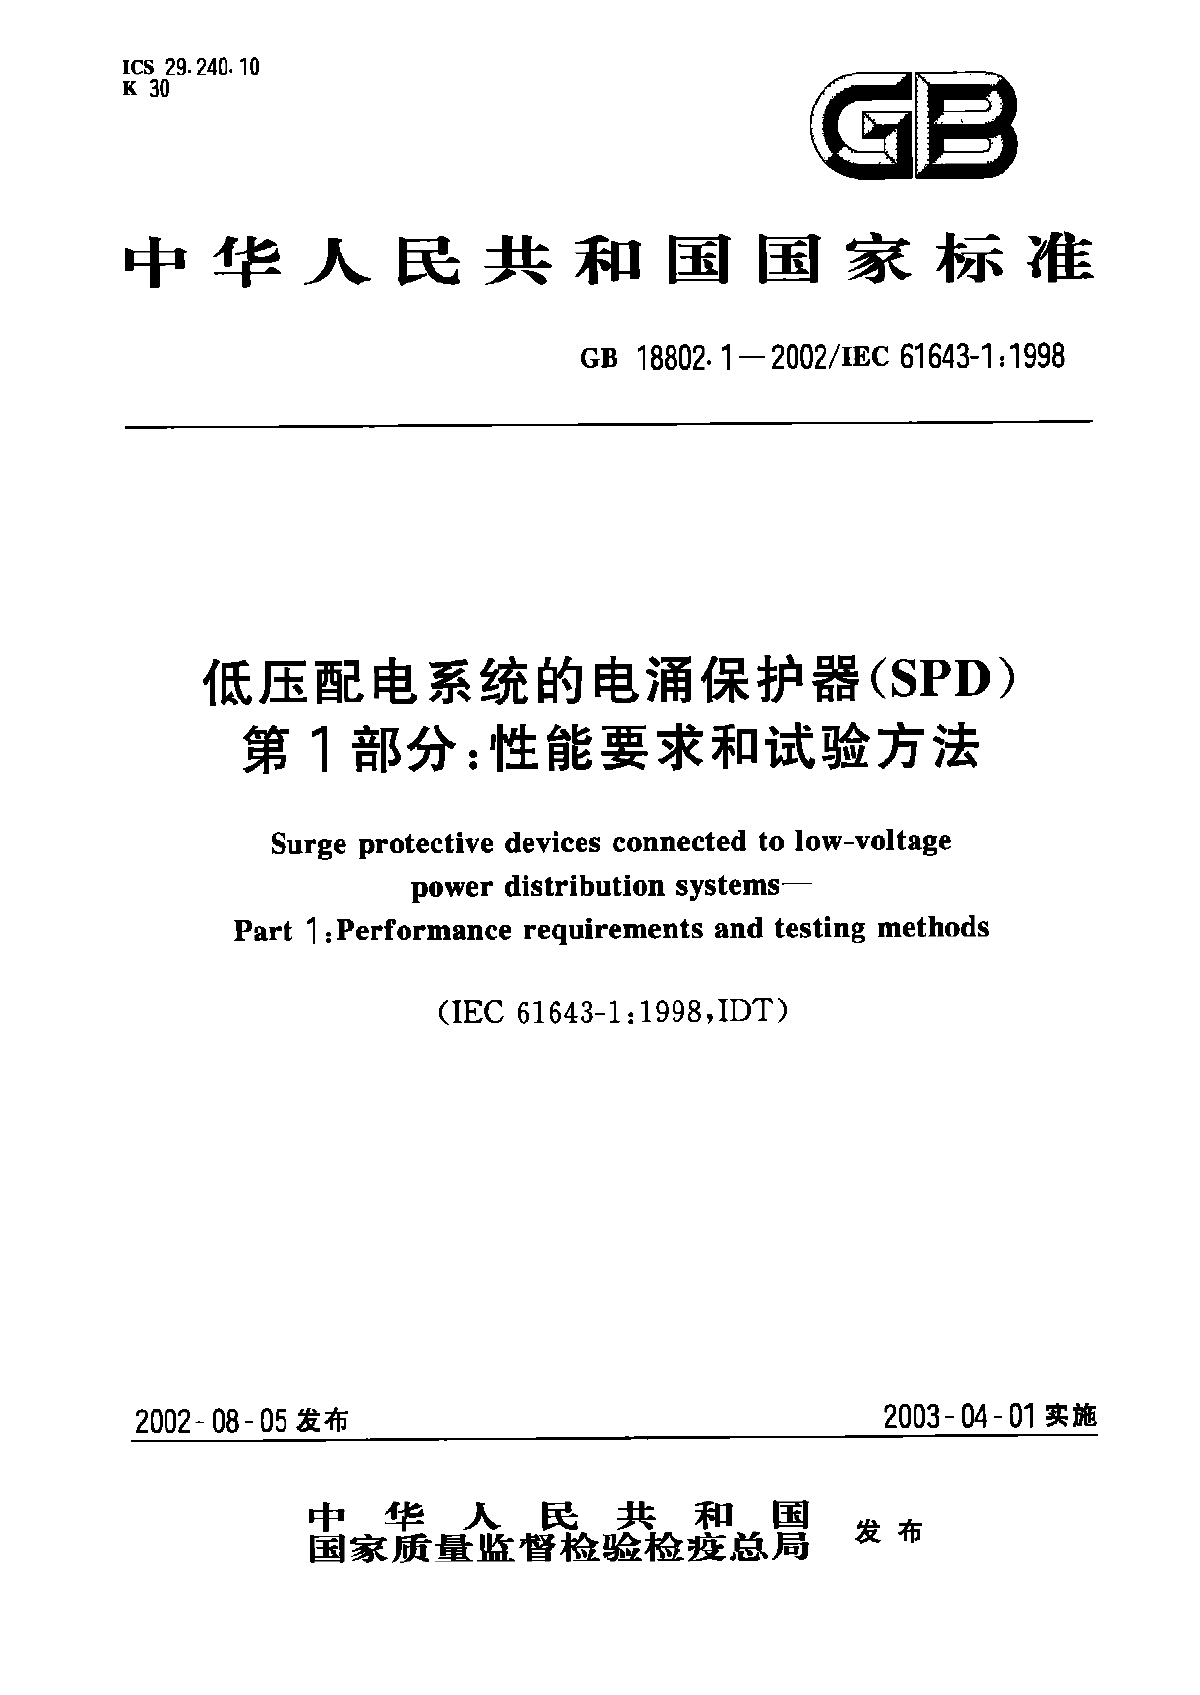 GB18802.1-2002低压配电系统的电涌保护器(SPD).pdf